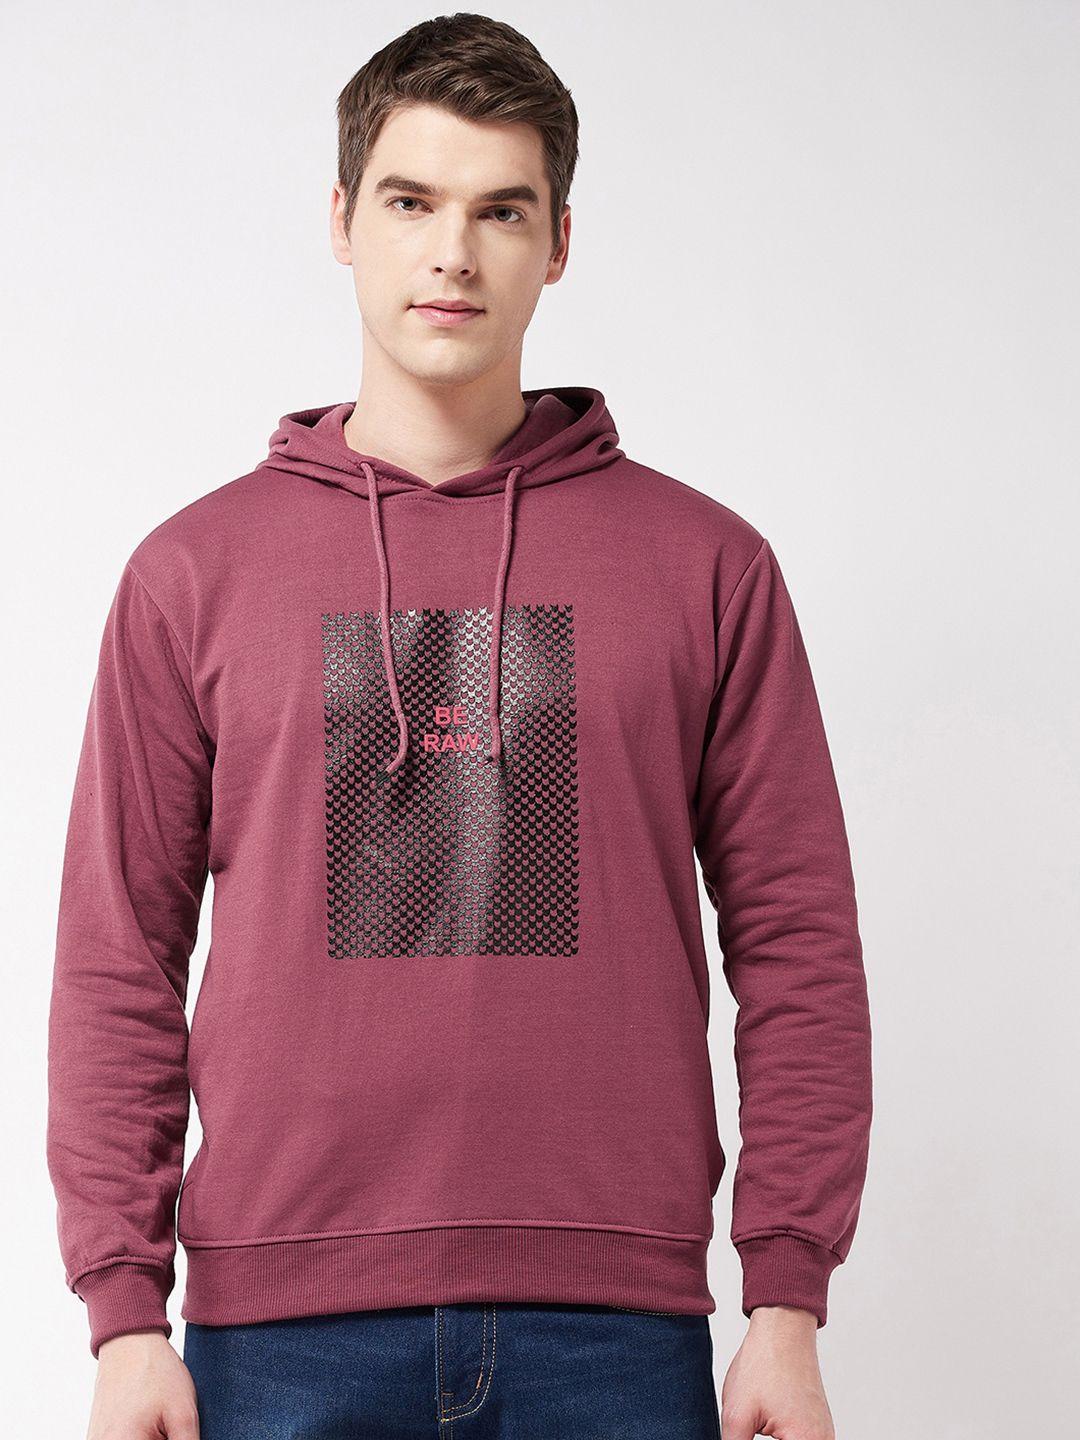 gritstones-men-printed-fleece-hooded-sweatshirt